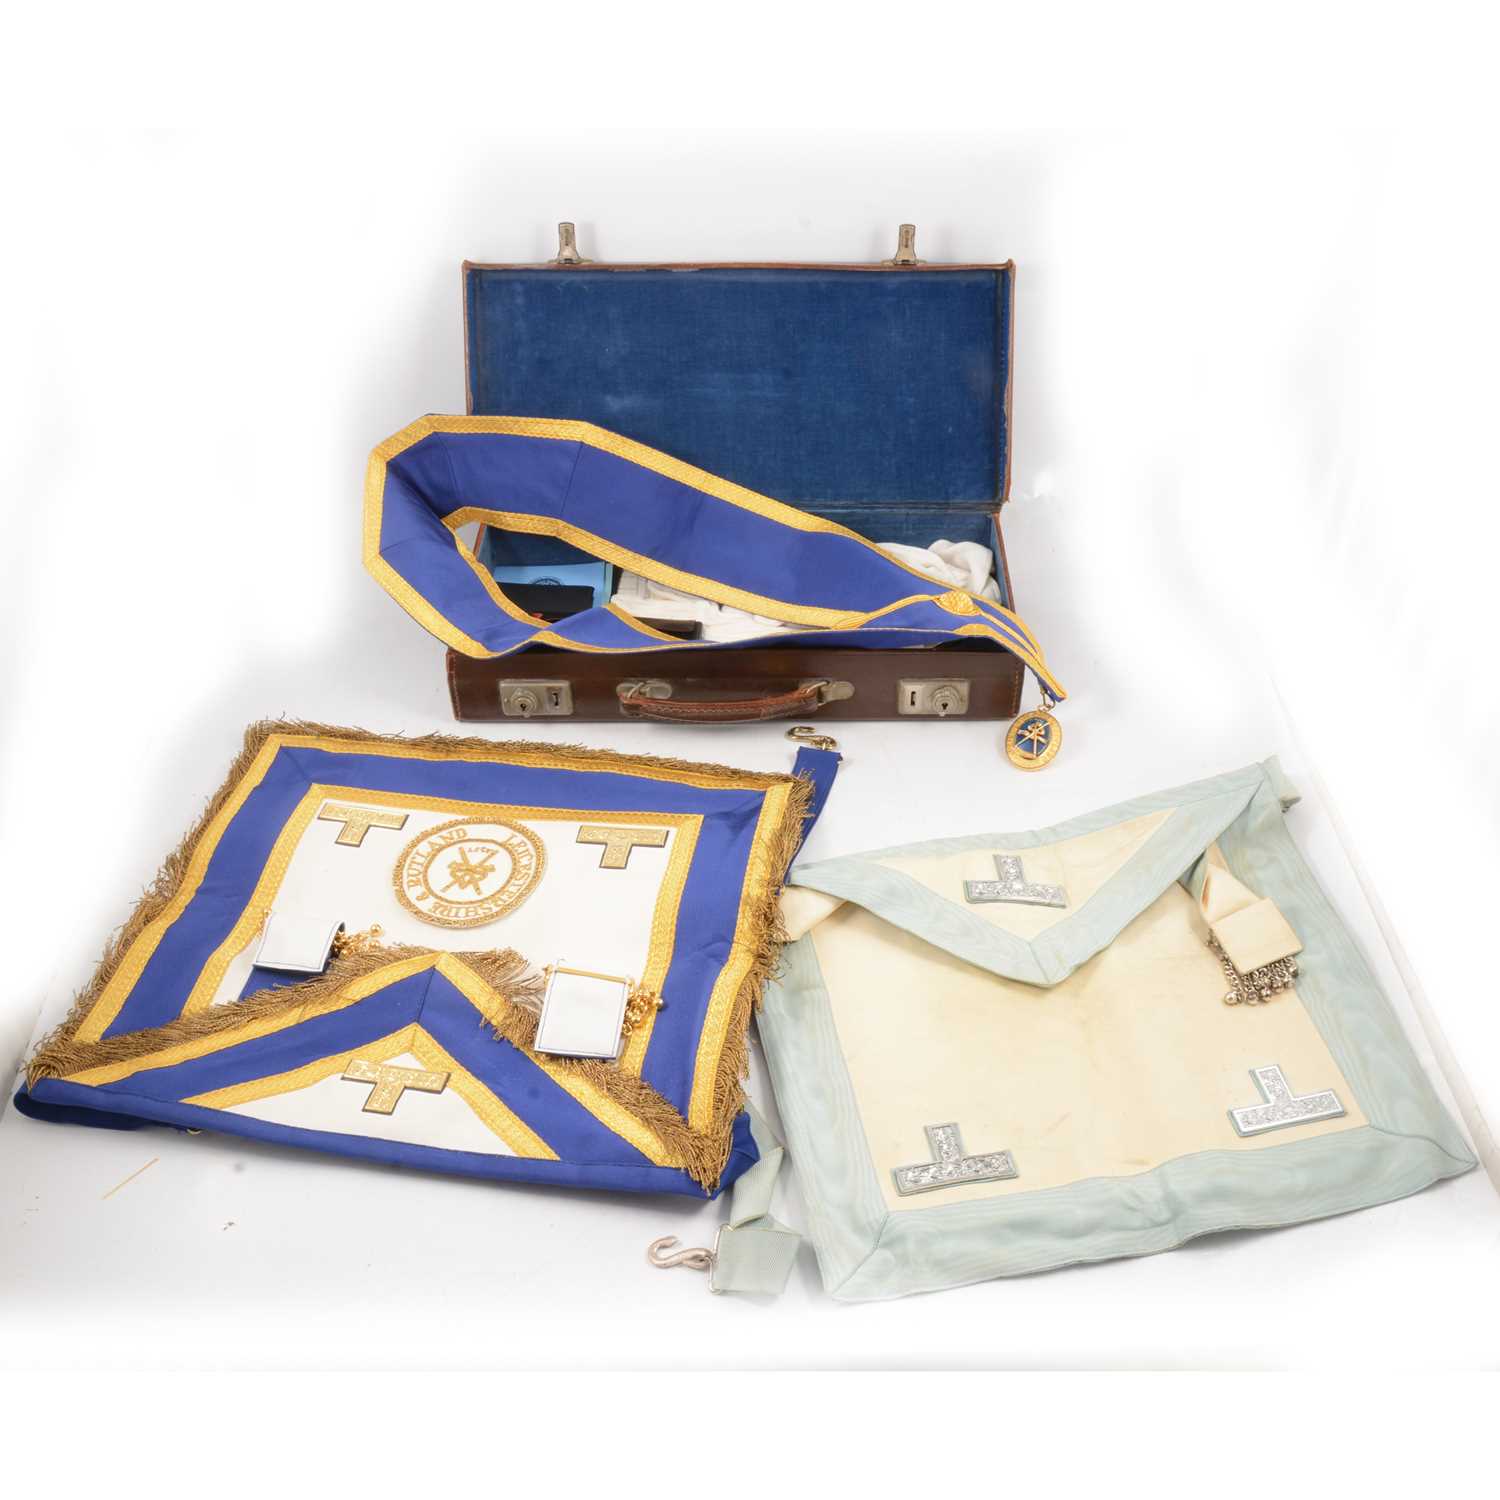 Lot 160 - Masonic interest; Regalia including aprons, sash, badges